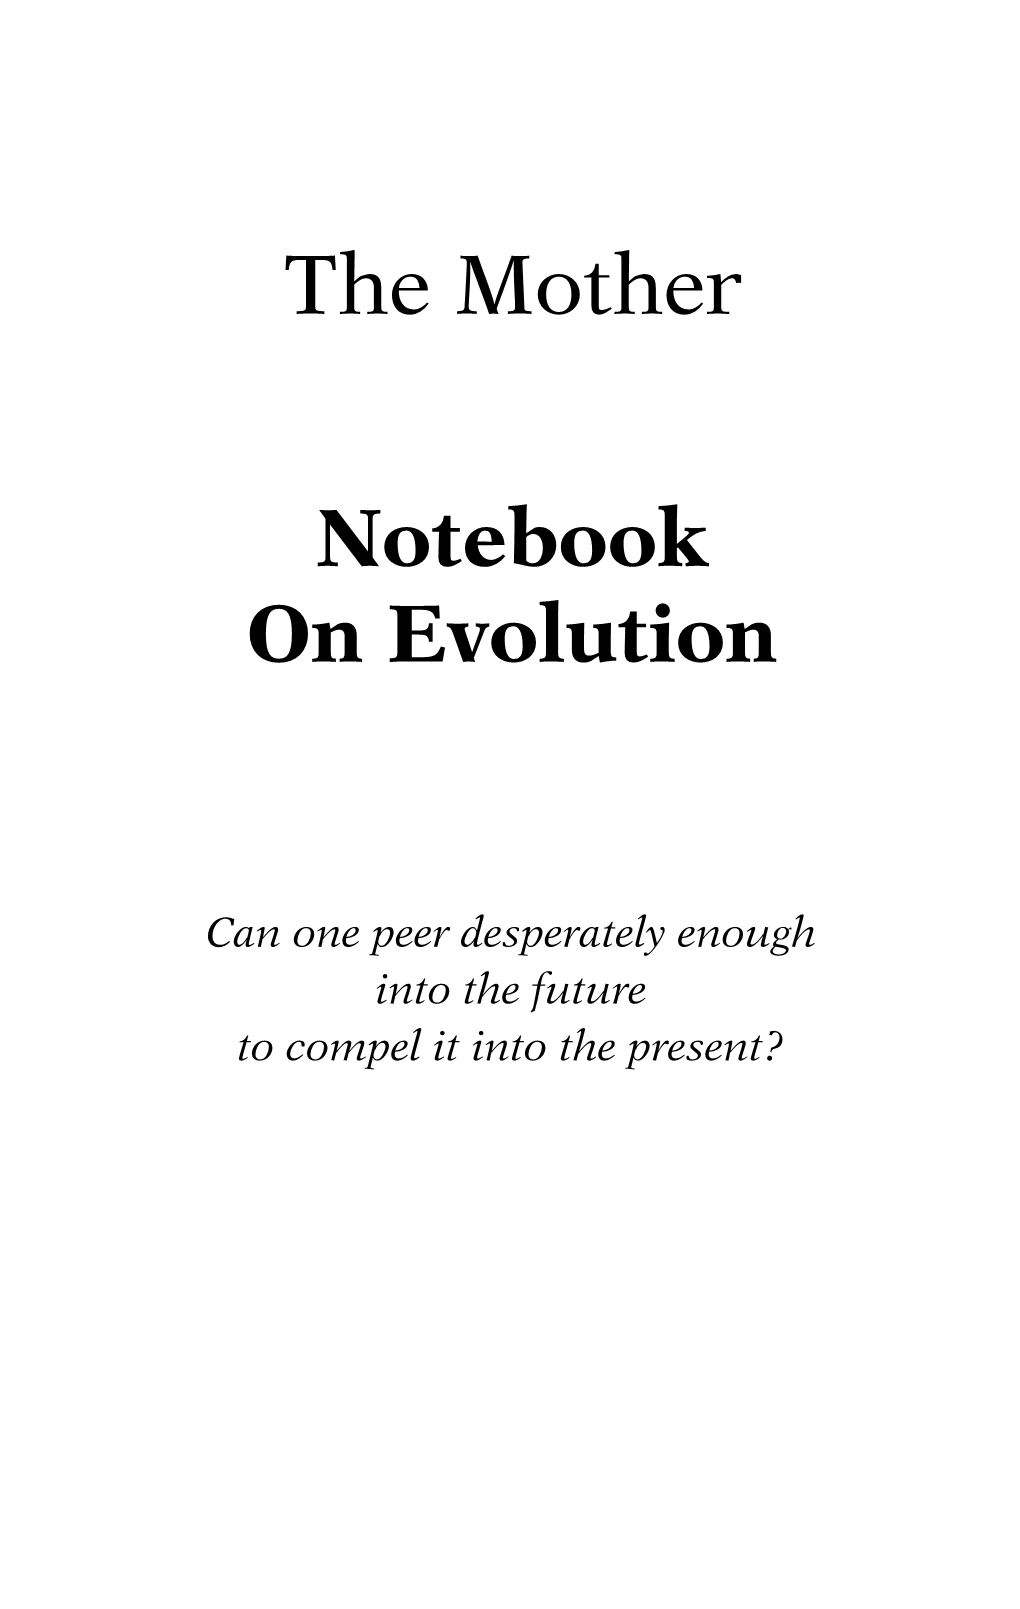 Notebook on Evolution